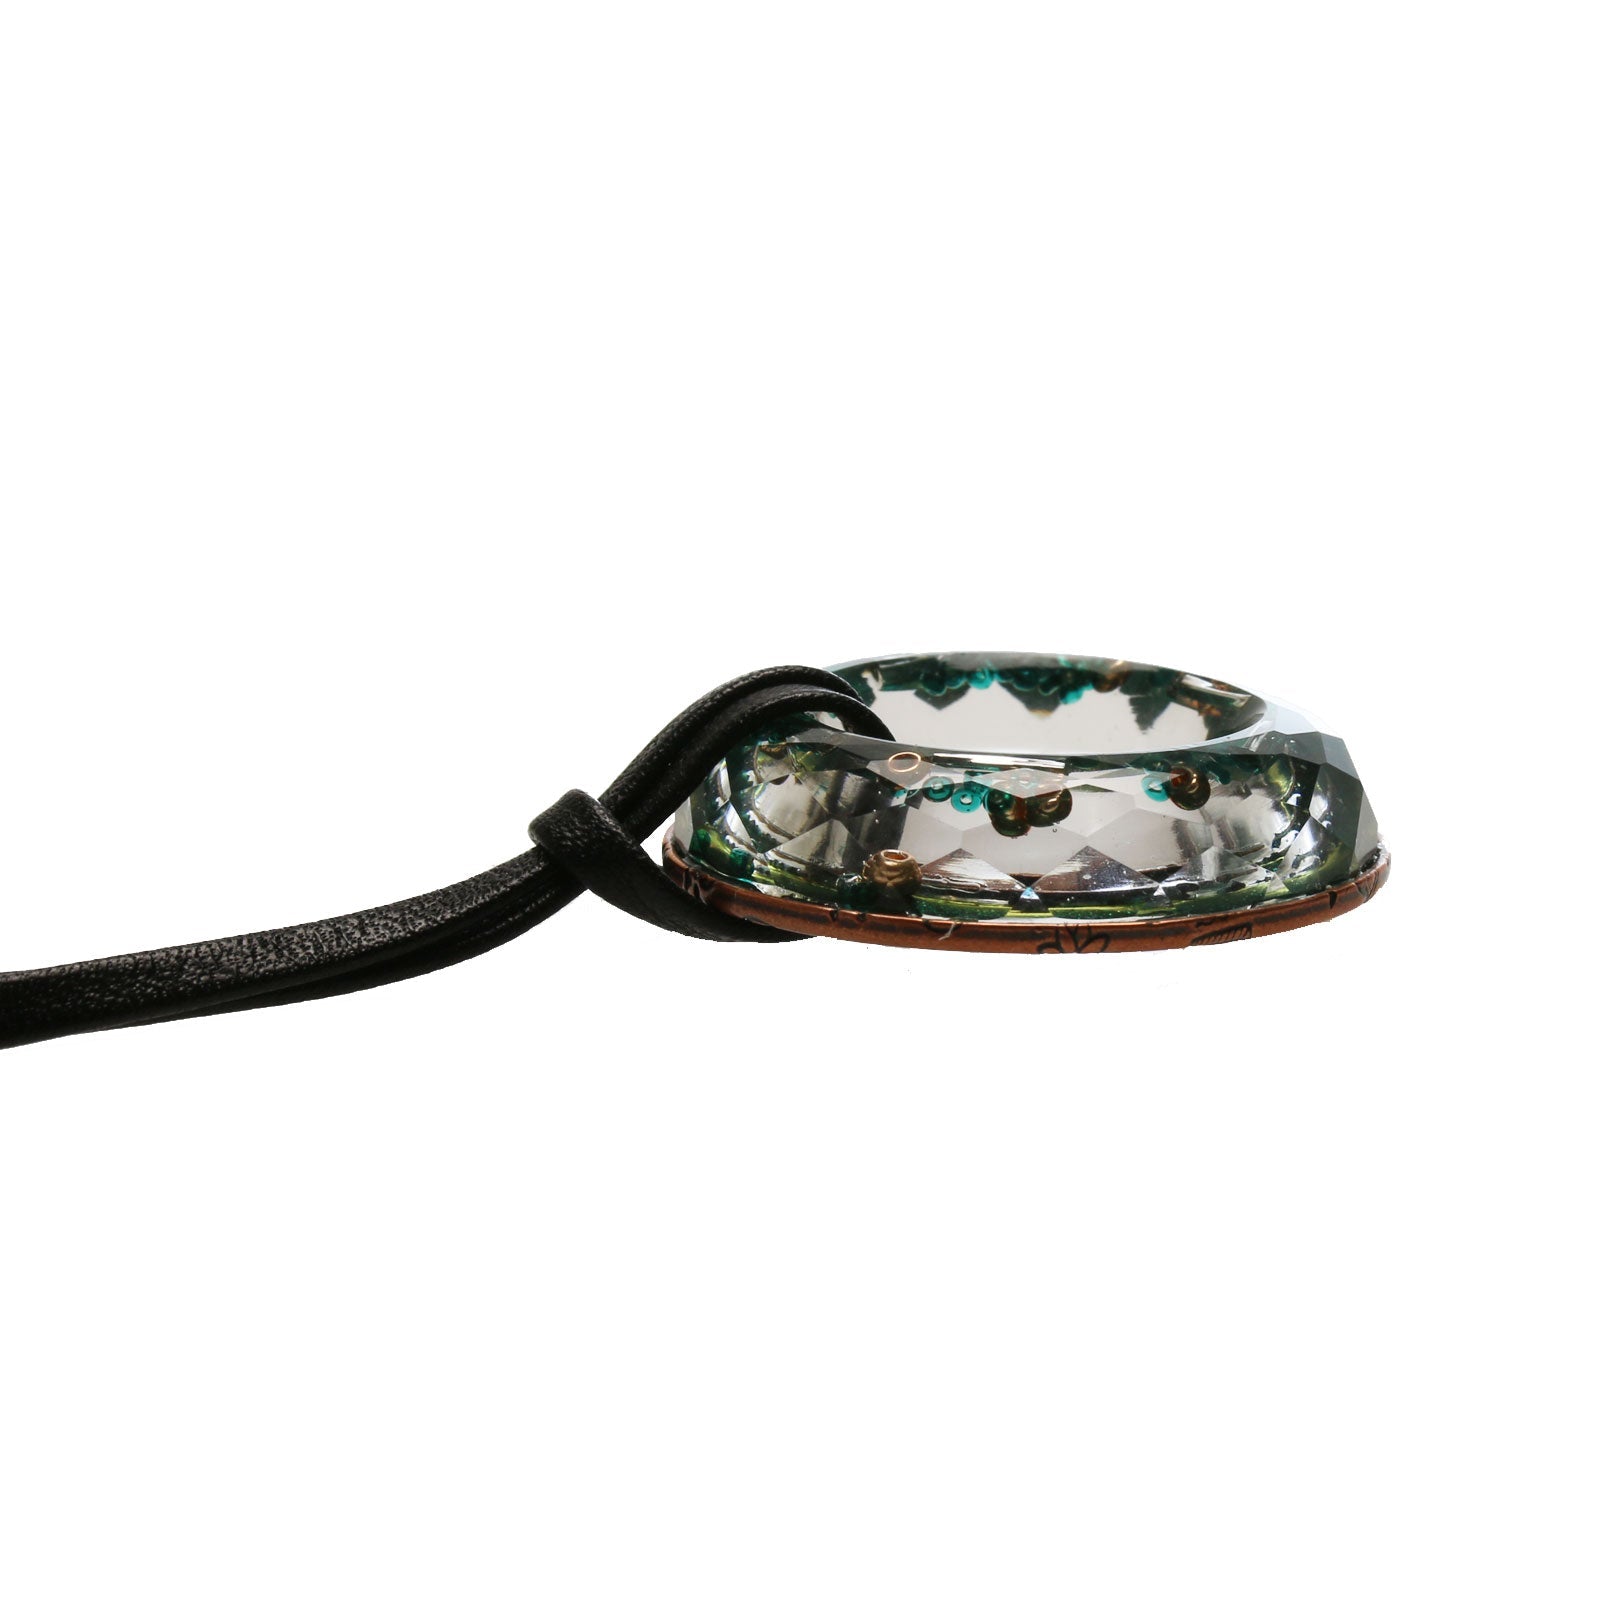 Eyeglass Holder Ring Necklace Emerald Green TAMARUSAN